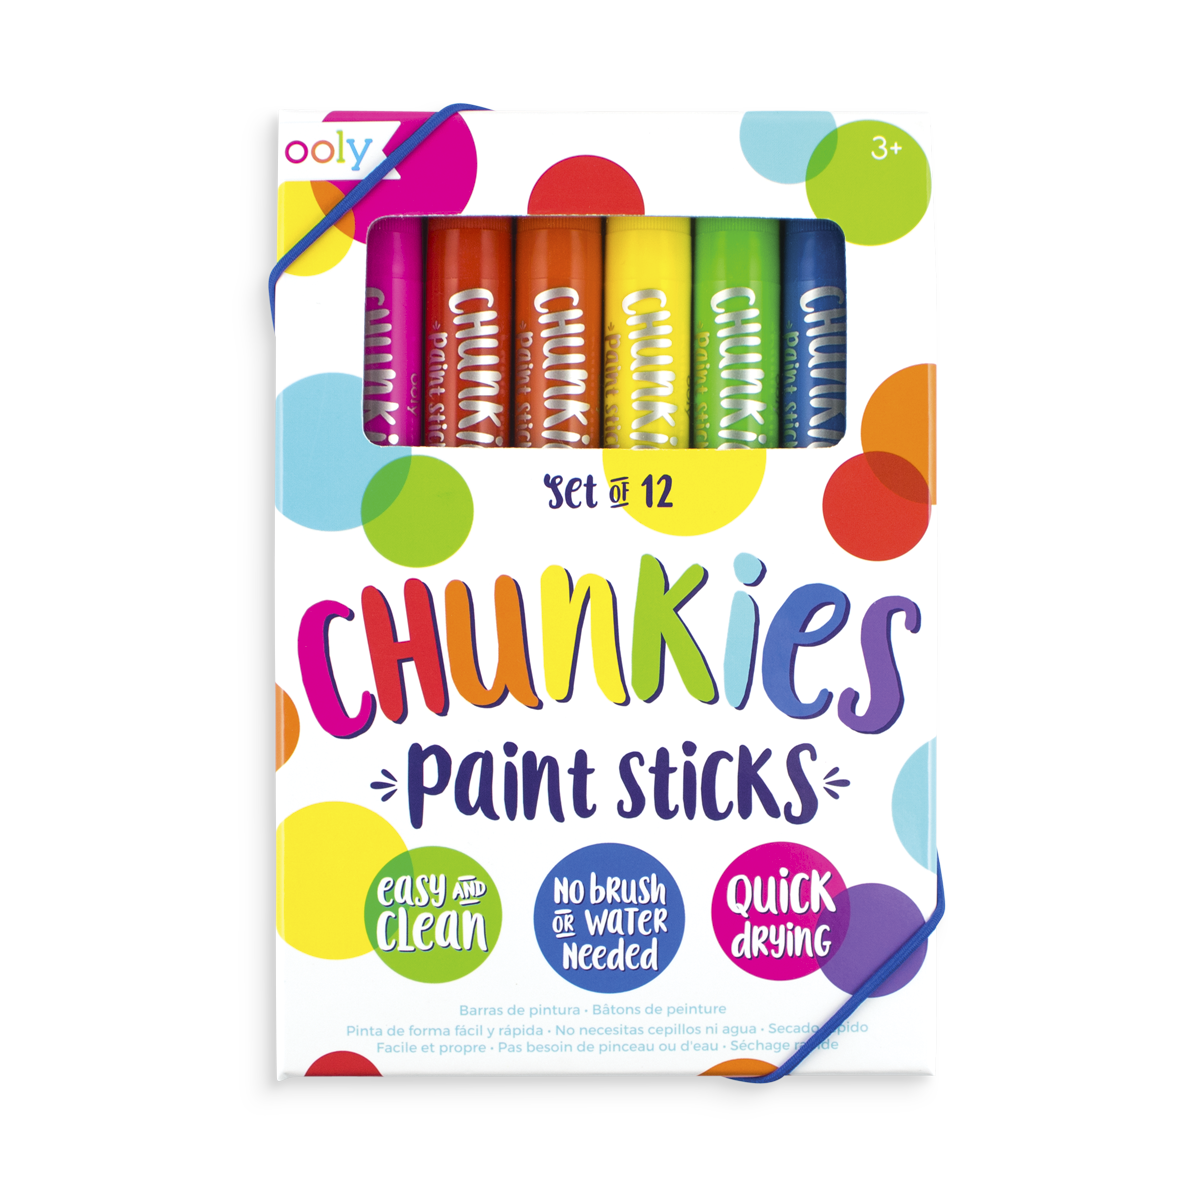 Ooly Classic Chunkies Paint Sticks